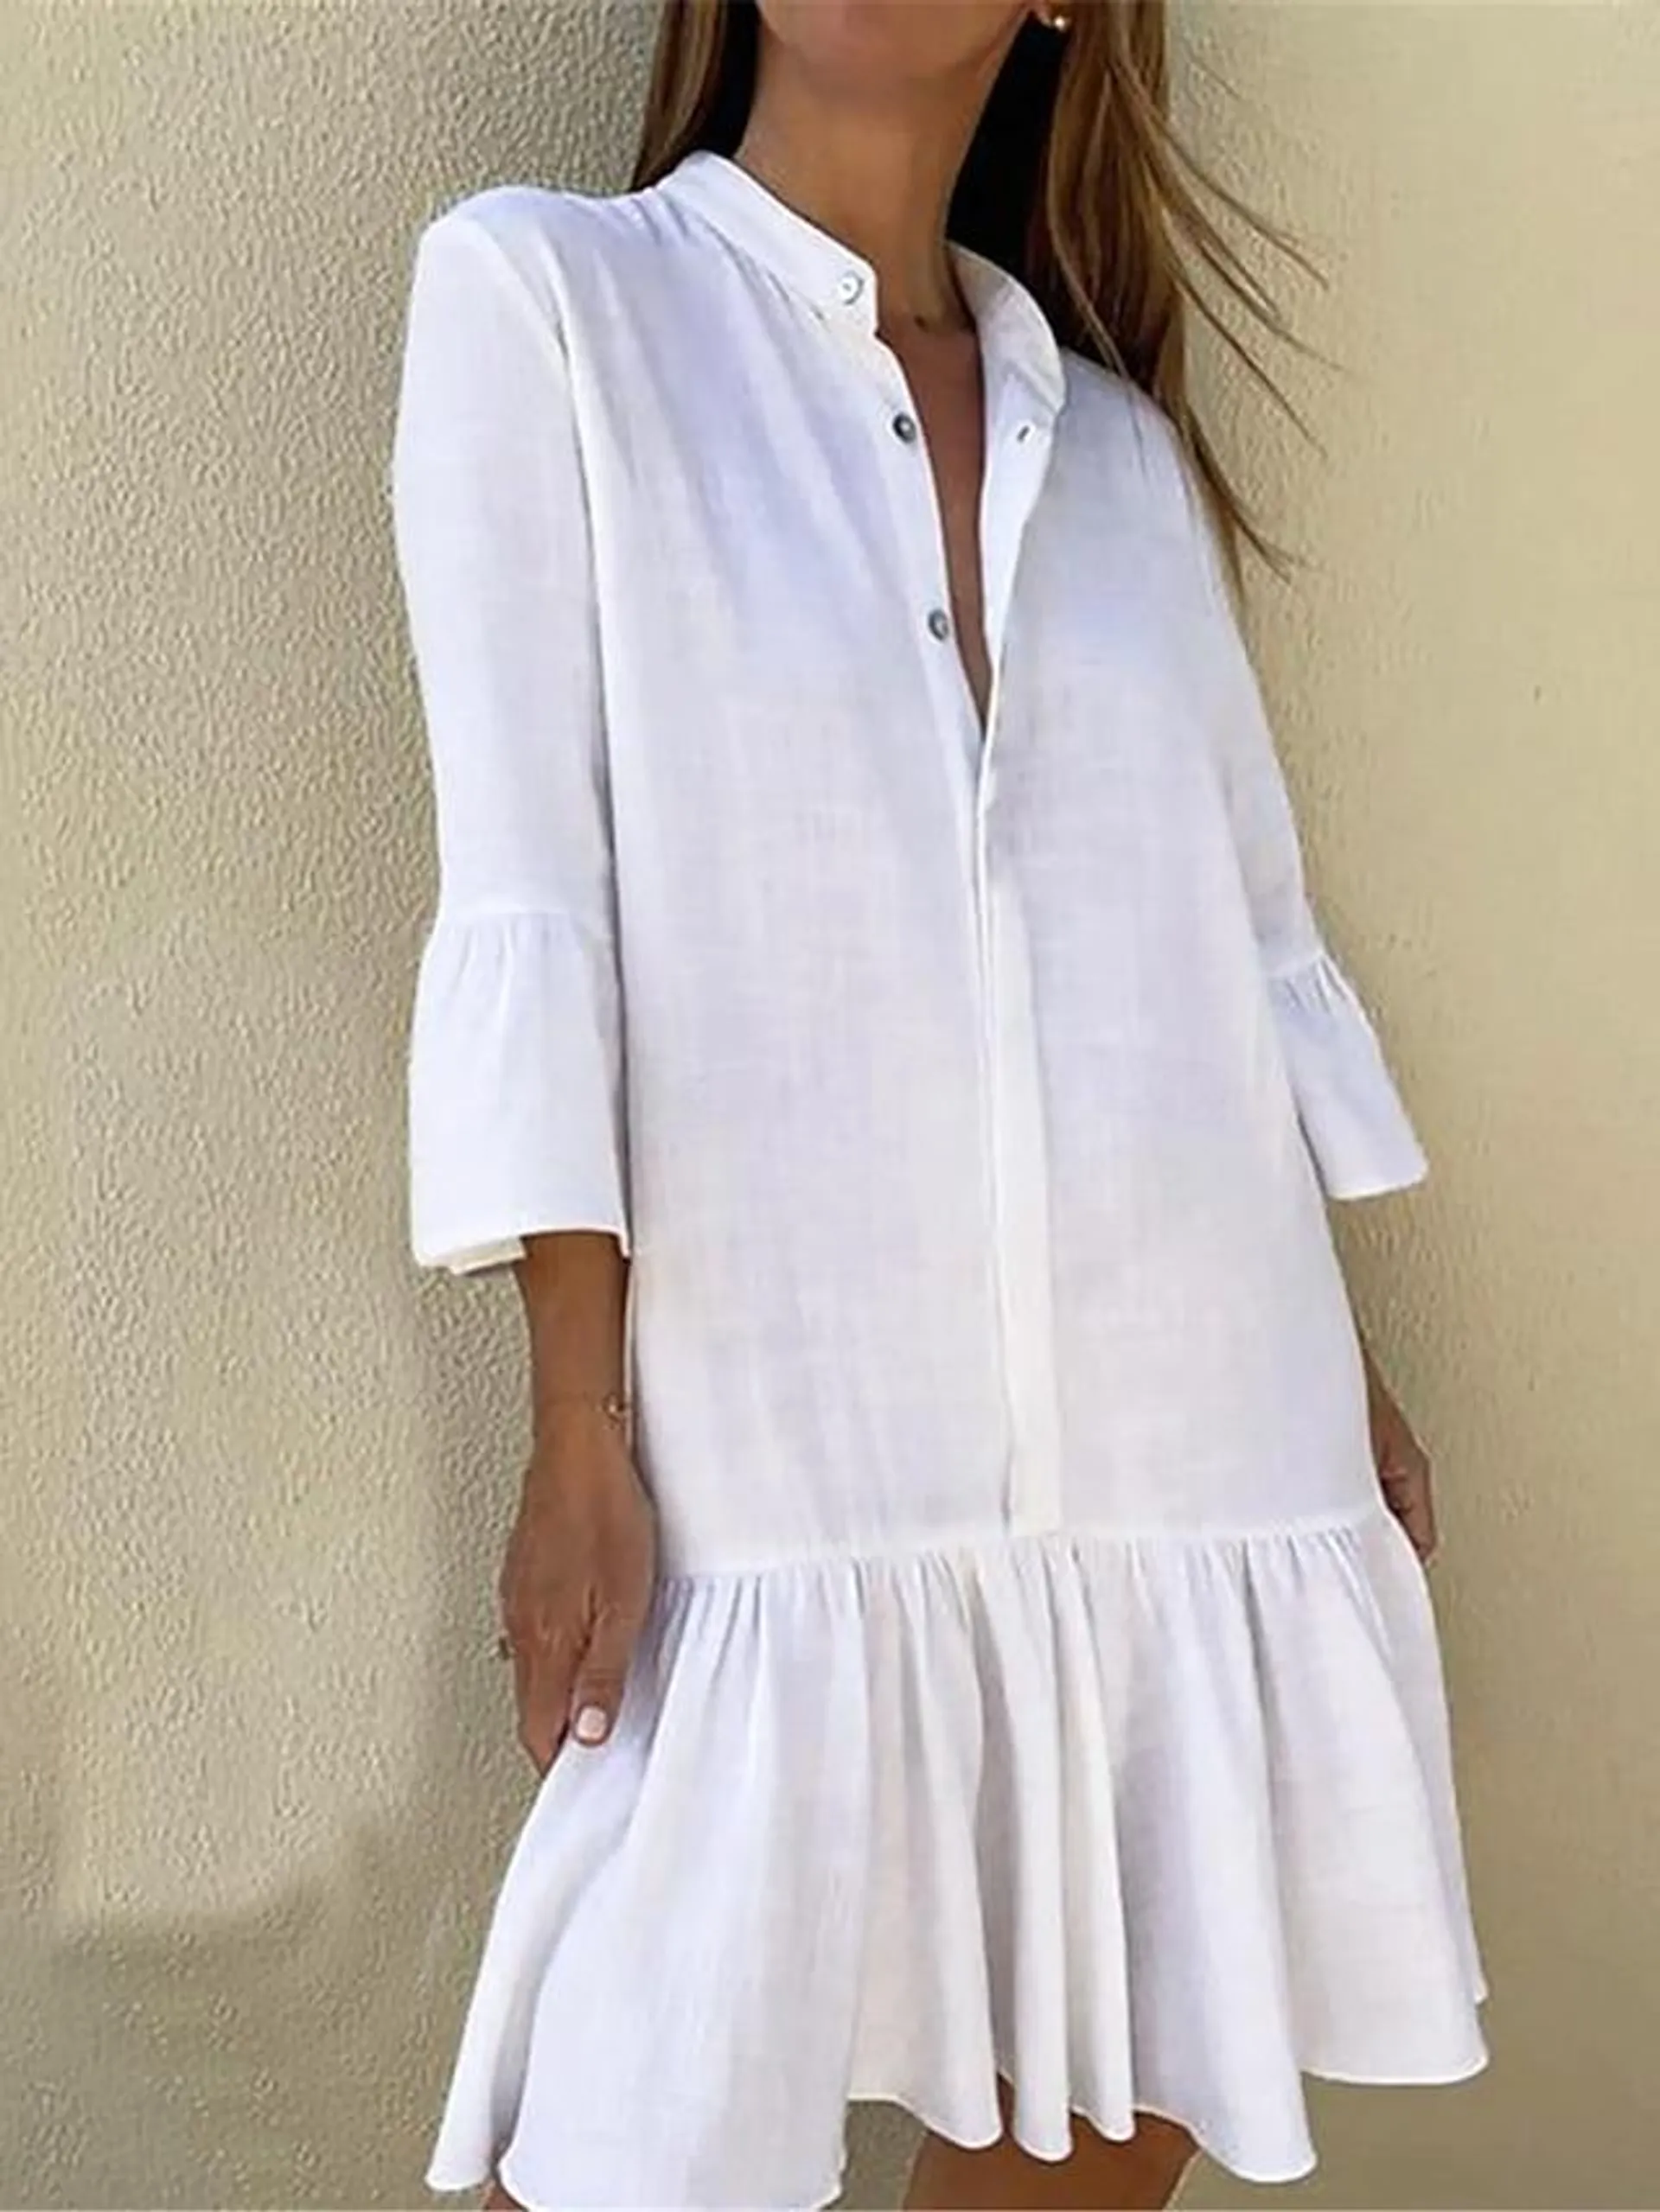 Women's White Dress Shirt Dress Casual Dress Midi Dress Ruffle Button Basic Daily Stand Collar 3/4 Length Sleeve Summer Spring Black White Plain